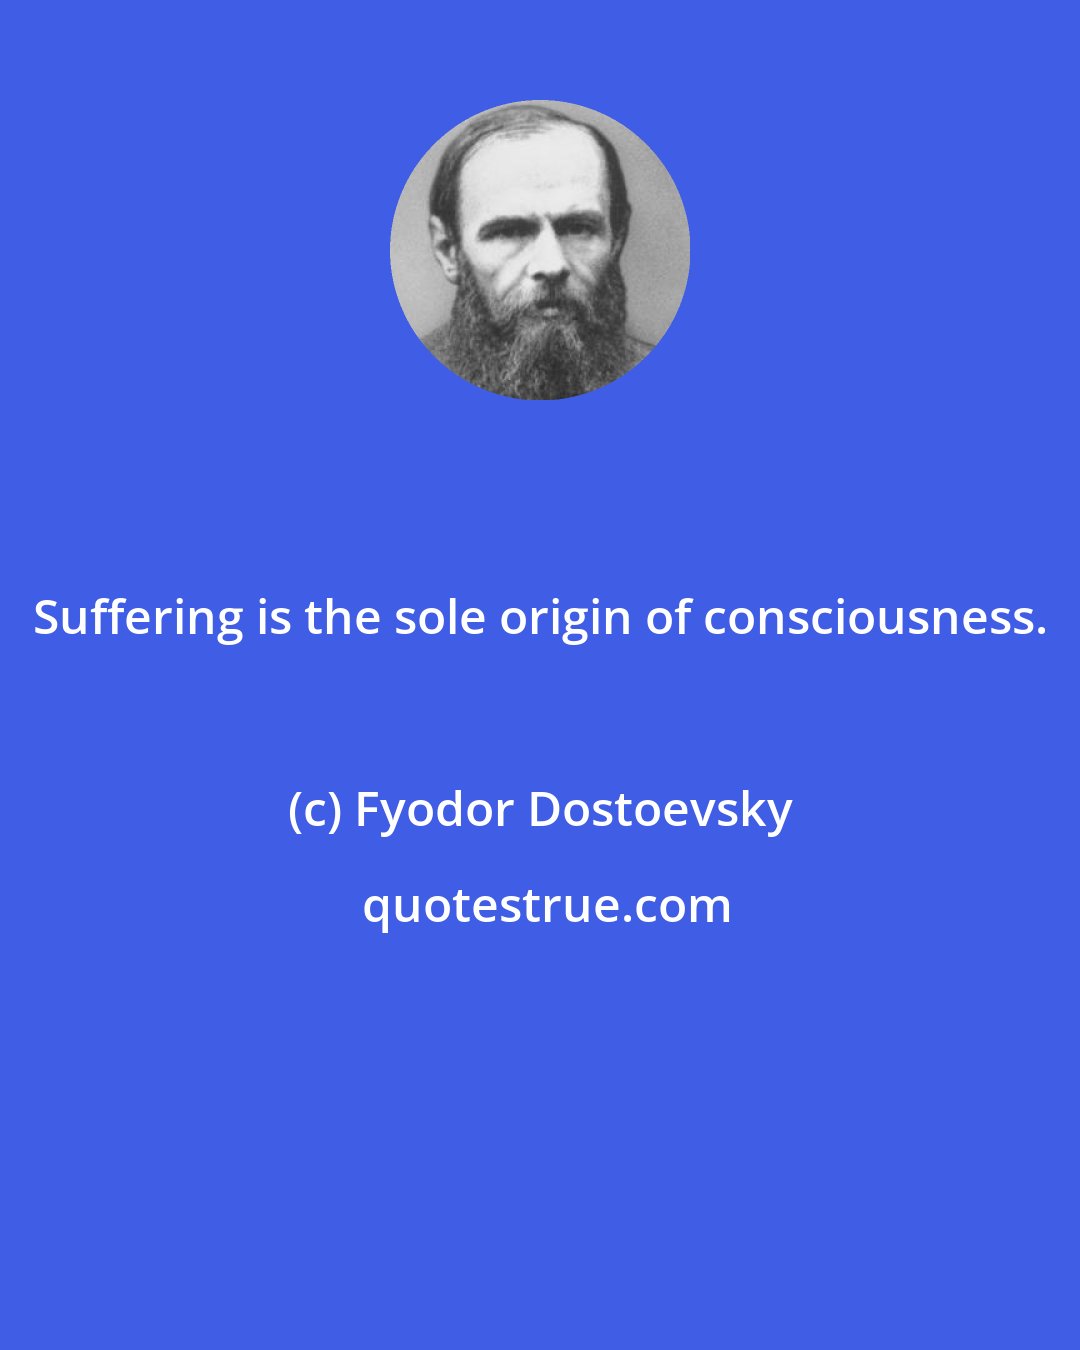 Fyodor Dostoevsky: Suffering is the sole origin of consciousness.